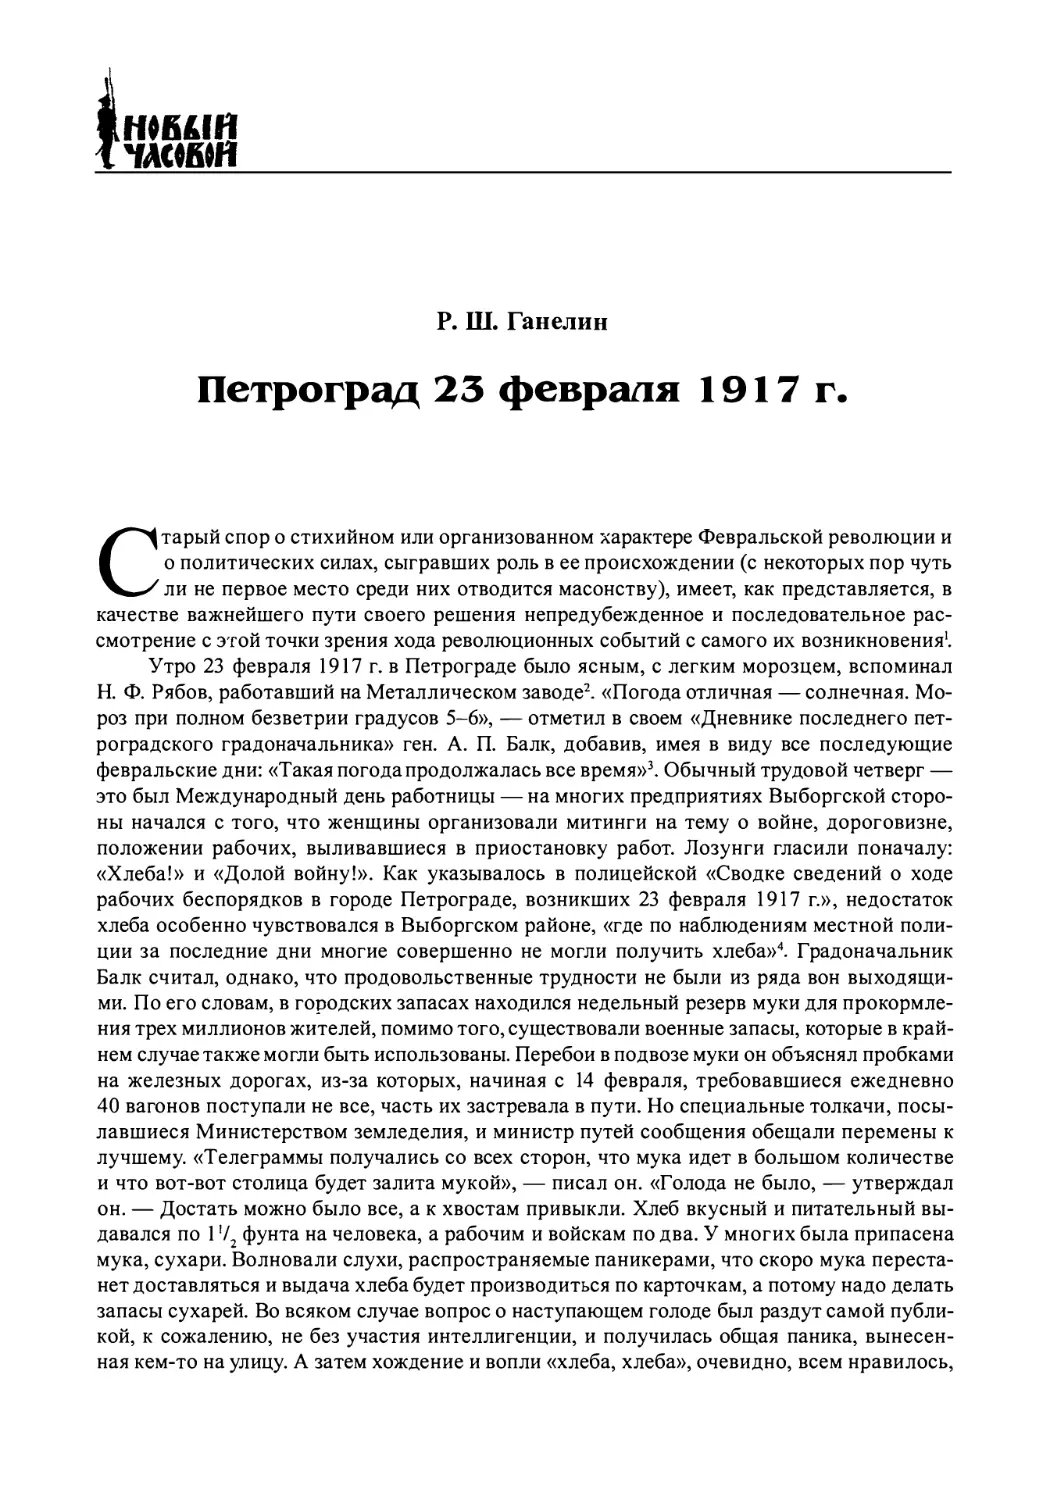 Р. Ш. Ганелин. Петроград 23 февраля 1917 г